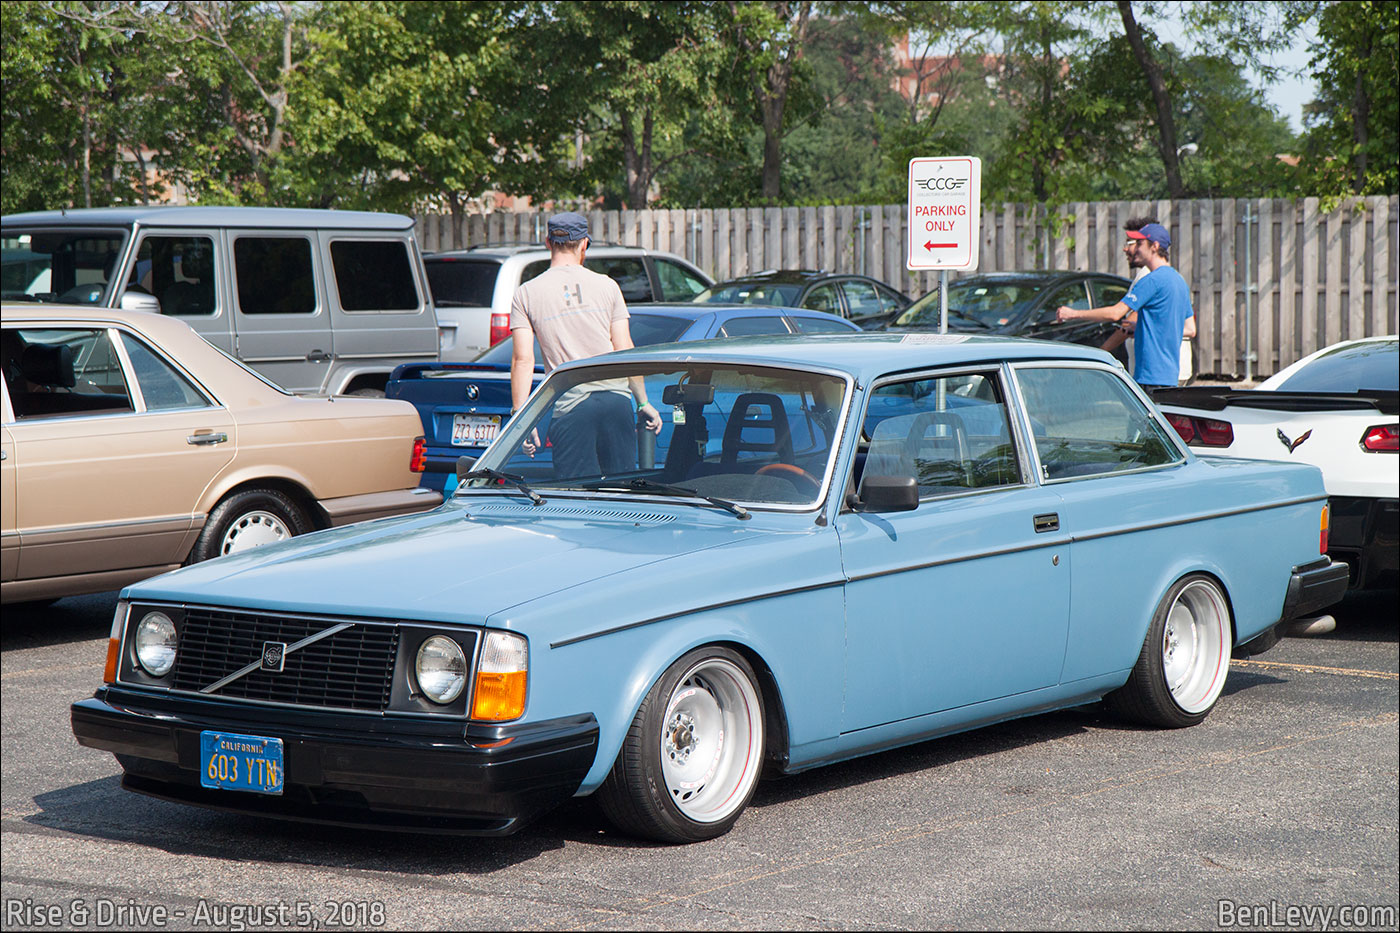 Blue Volvo 242 DL